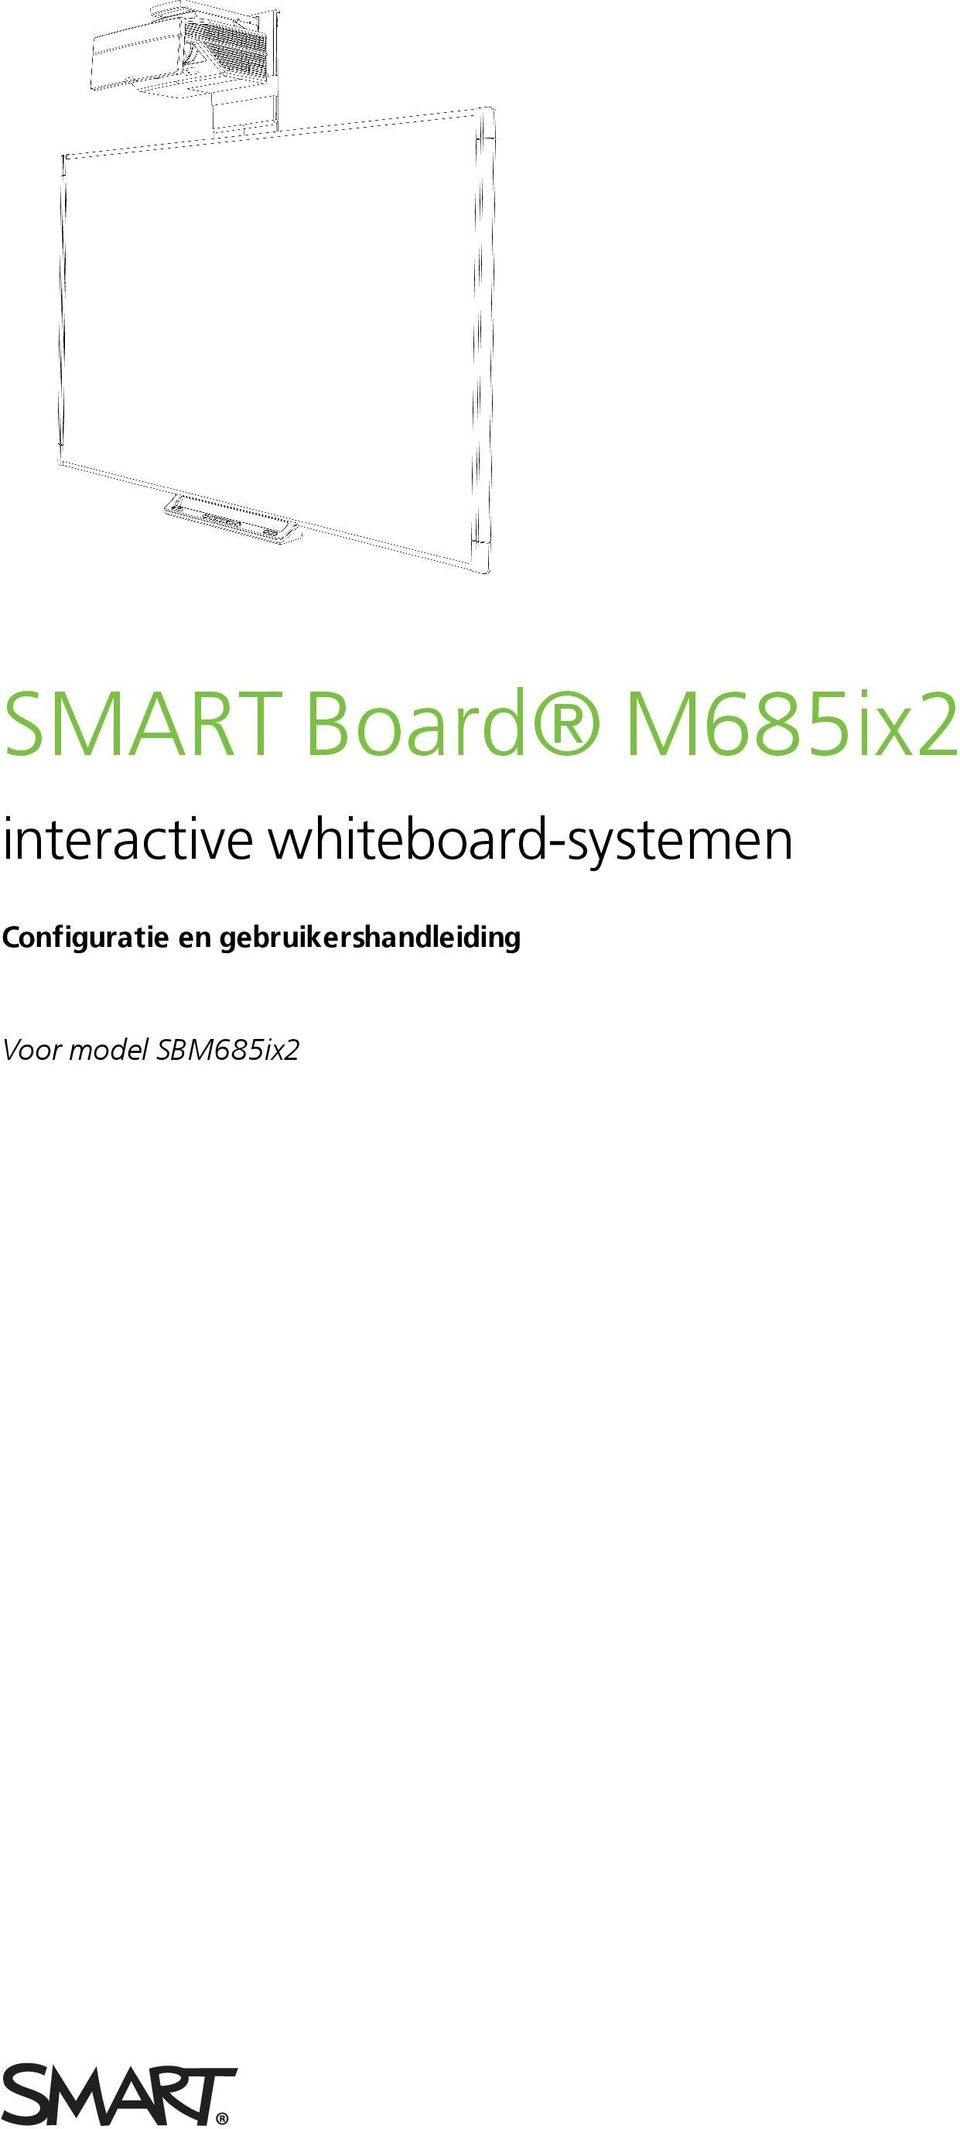 whiteboard-systemen